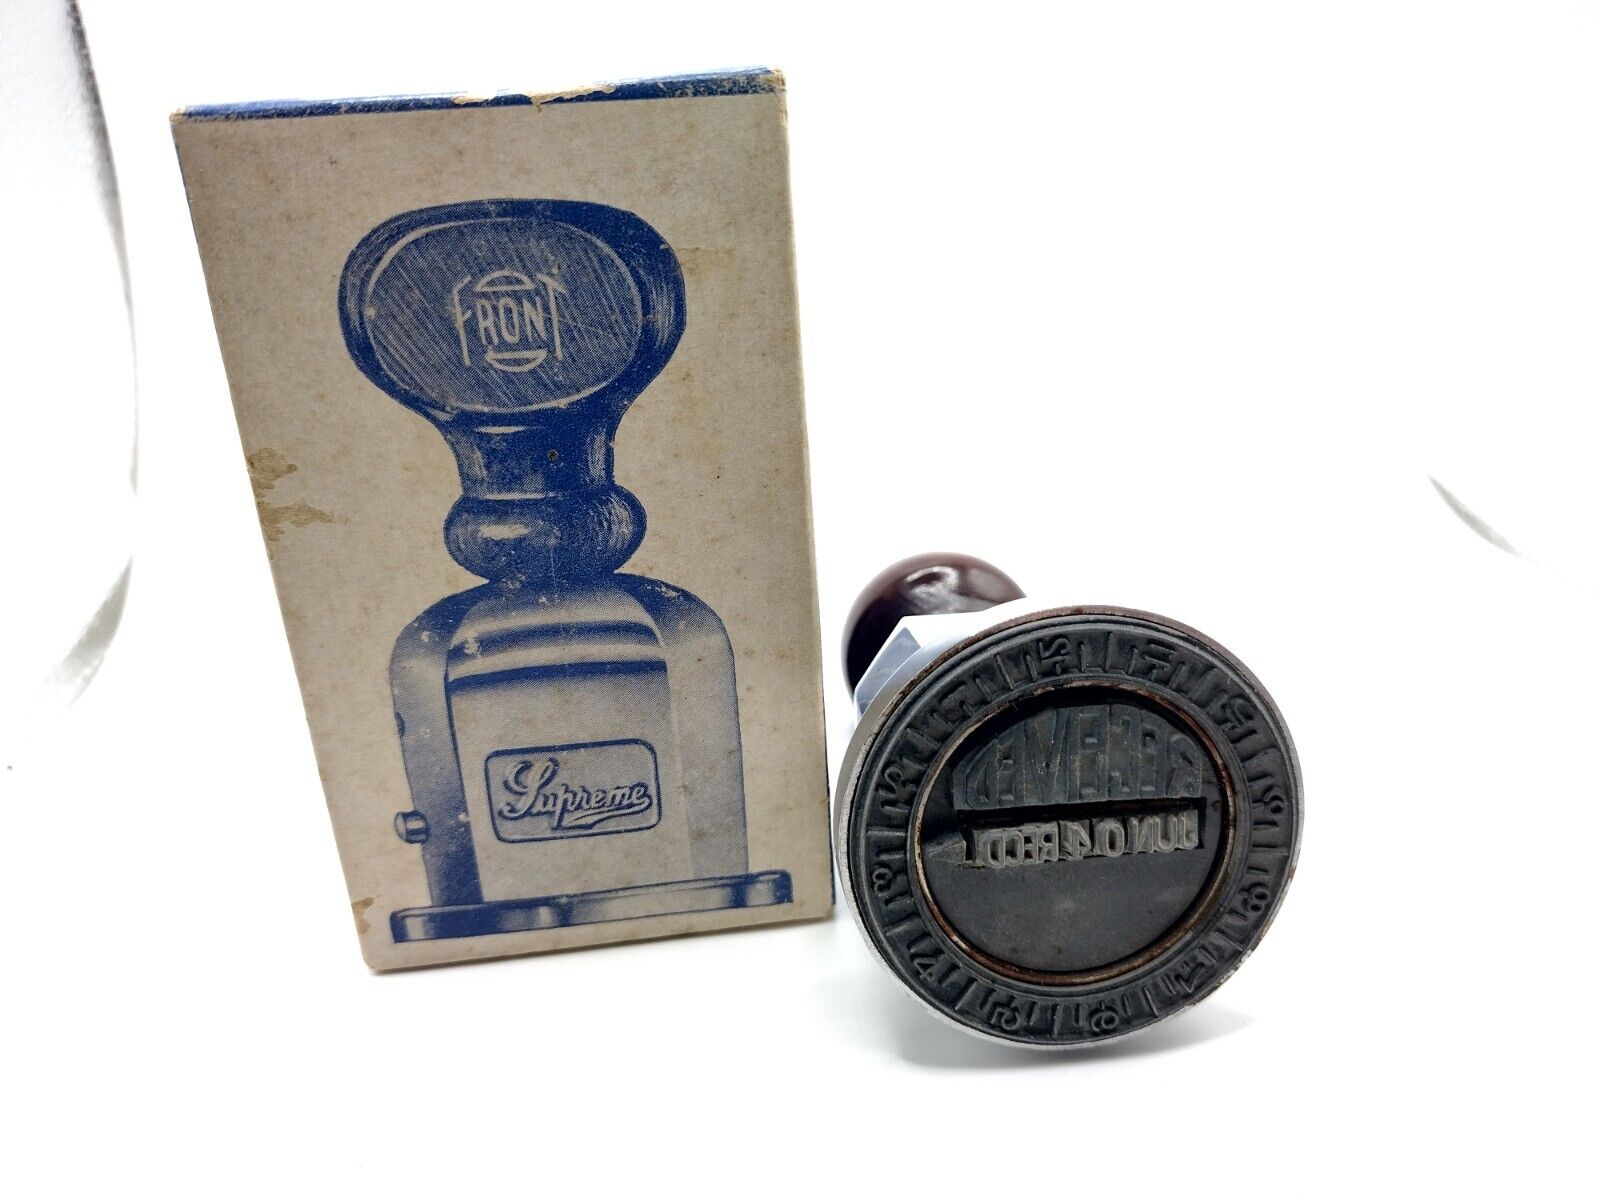 Vintage Antique superior Supreme Detriot seal & Time stamp with box